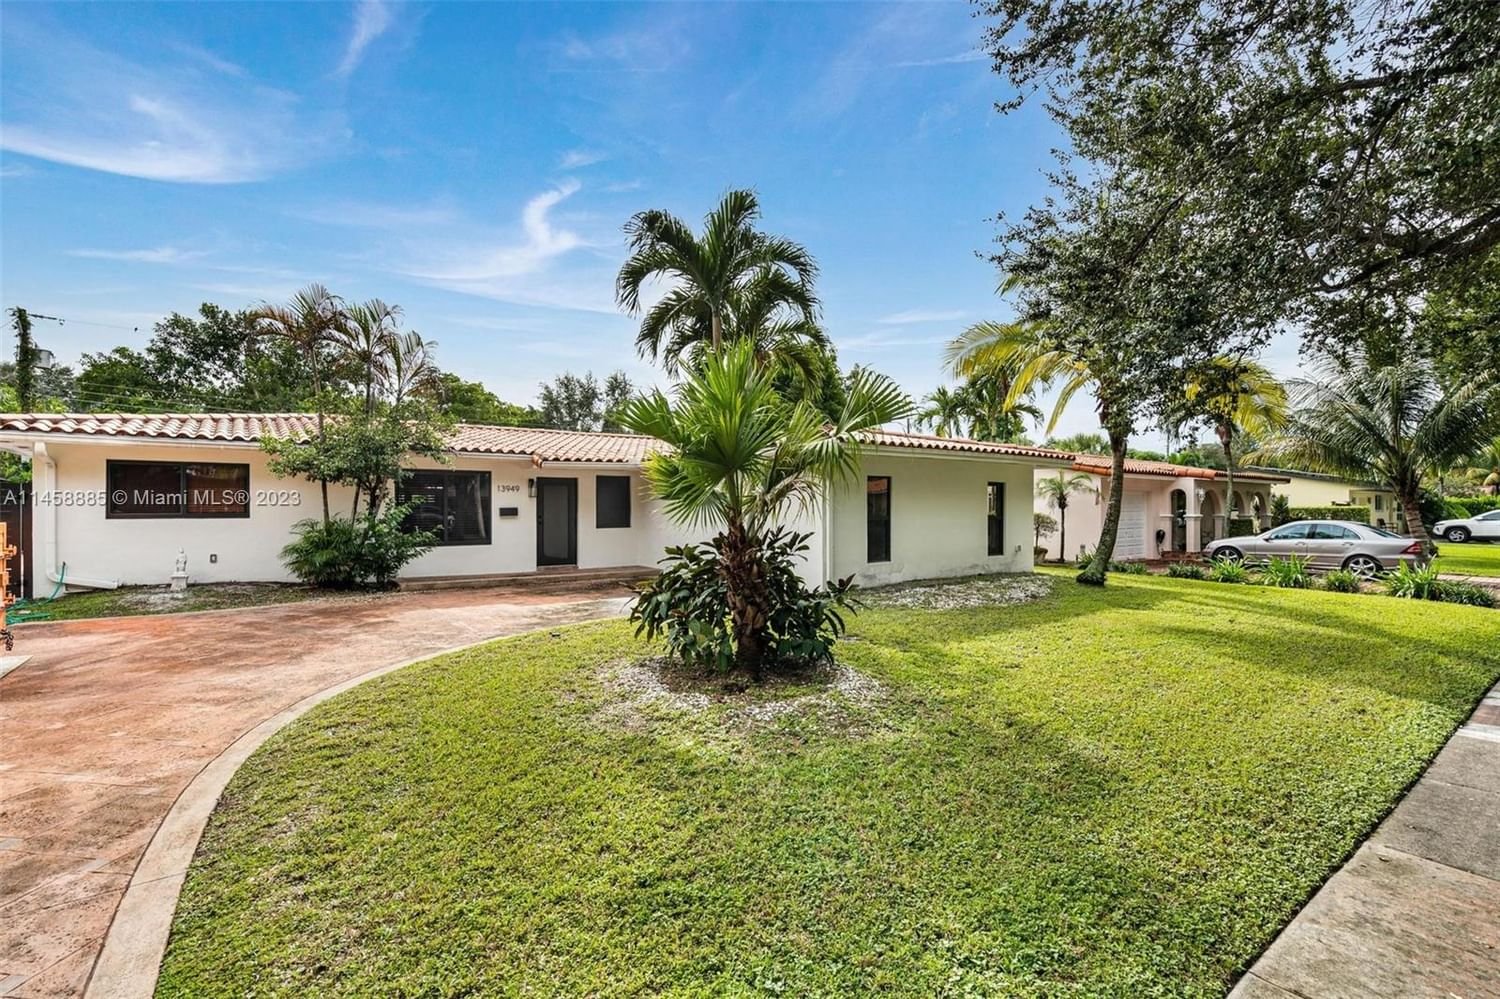 Real estate property located at 13949 Lake George Ct, Miami-Dade County, MIAMI LAKES SEC ONE, Miami Lakes, FL